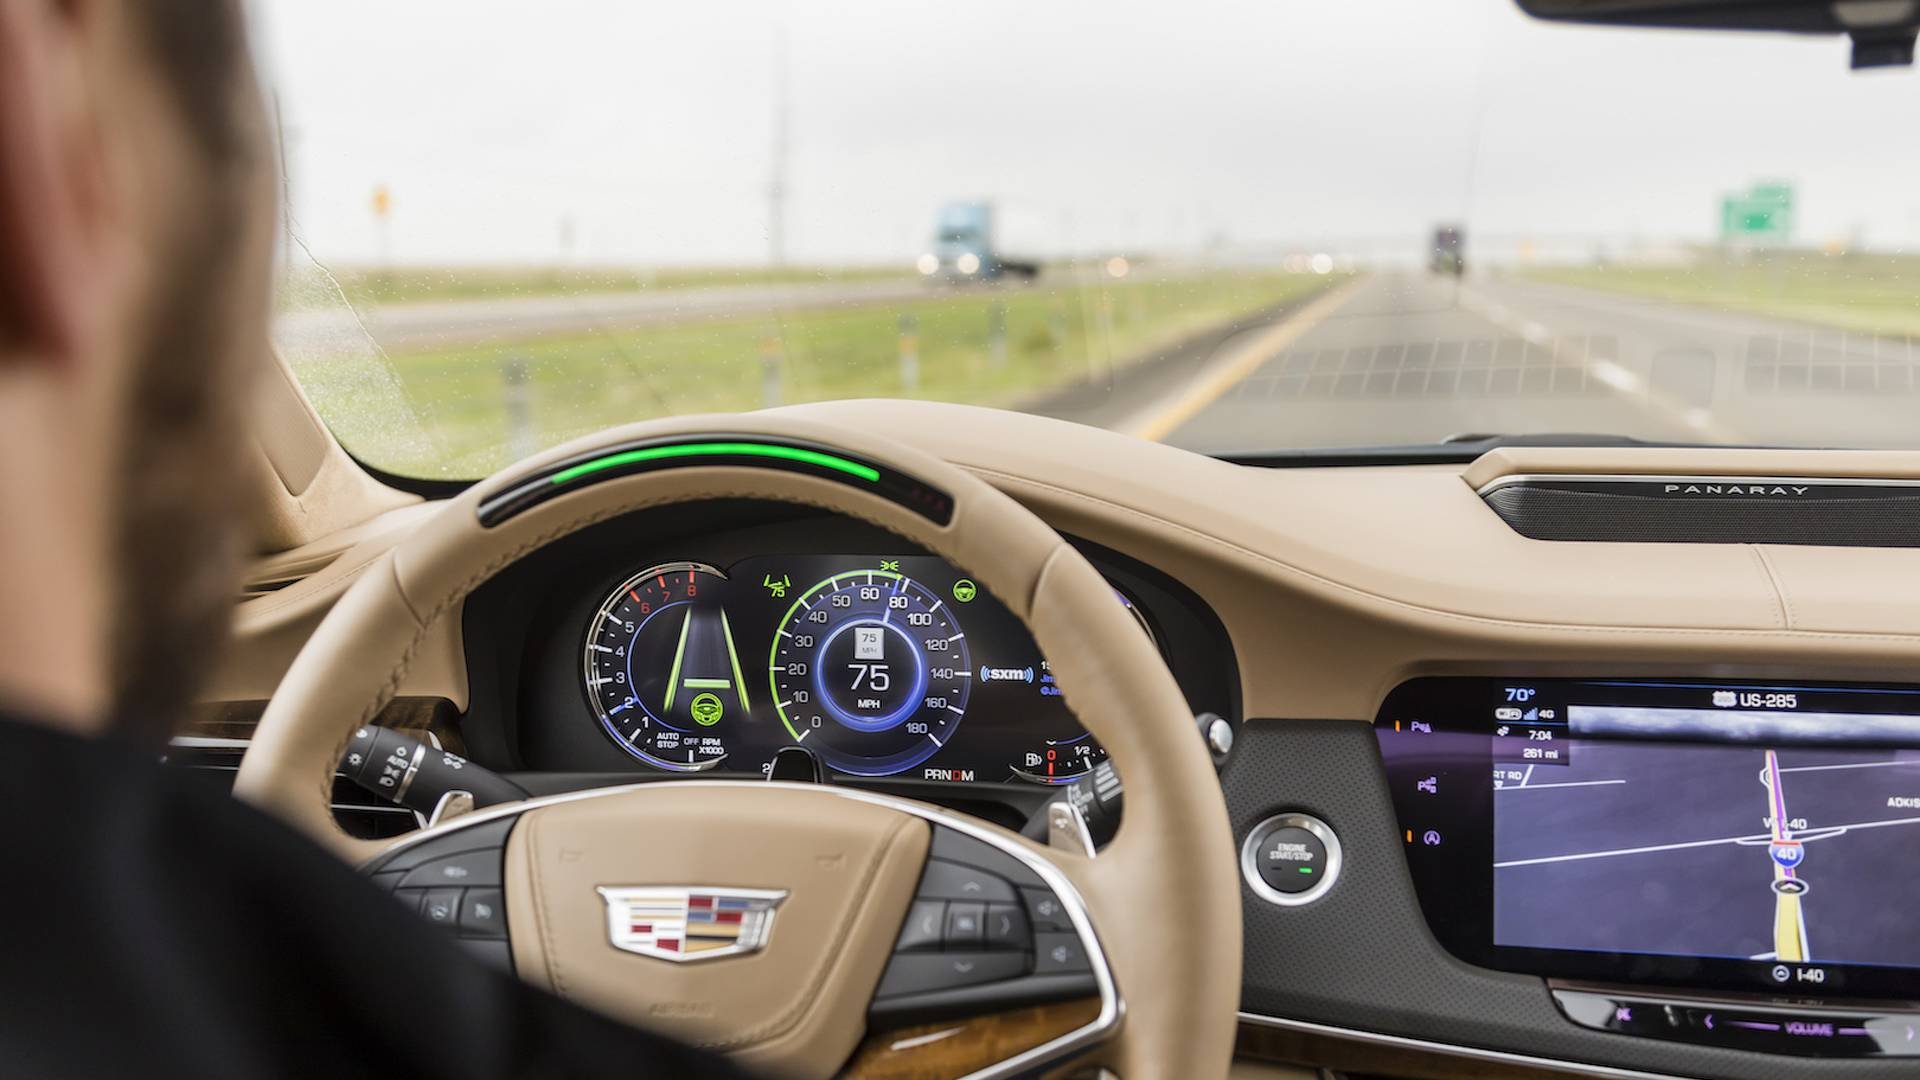 Consumer Reports Rates Cadillac Super Cruise Ahead Of Tesla Autopilot